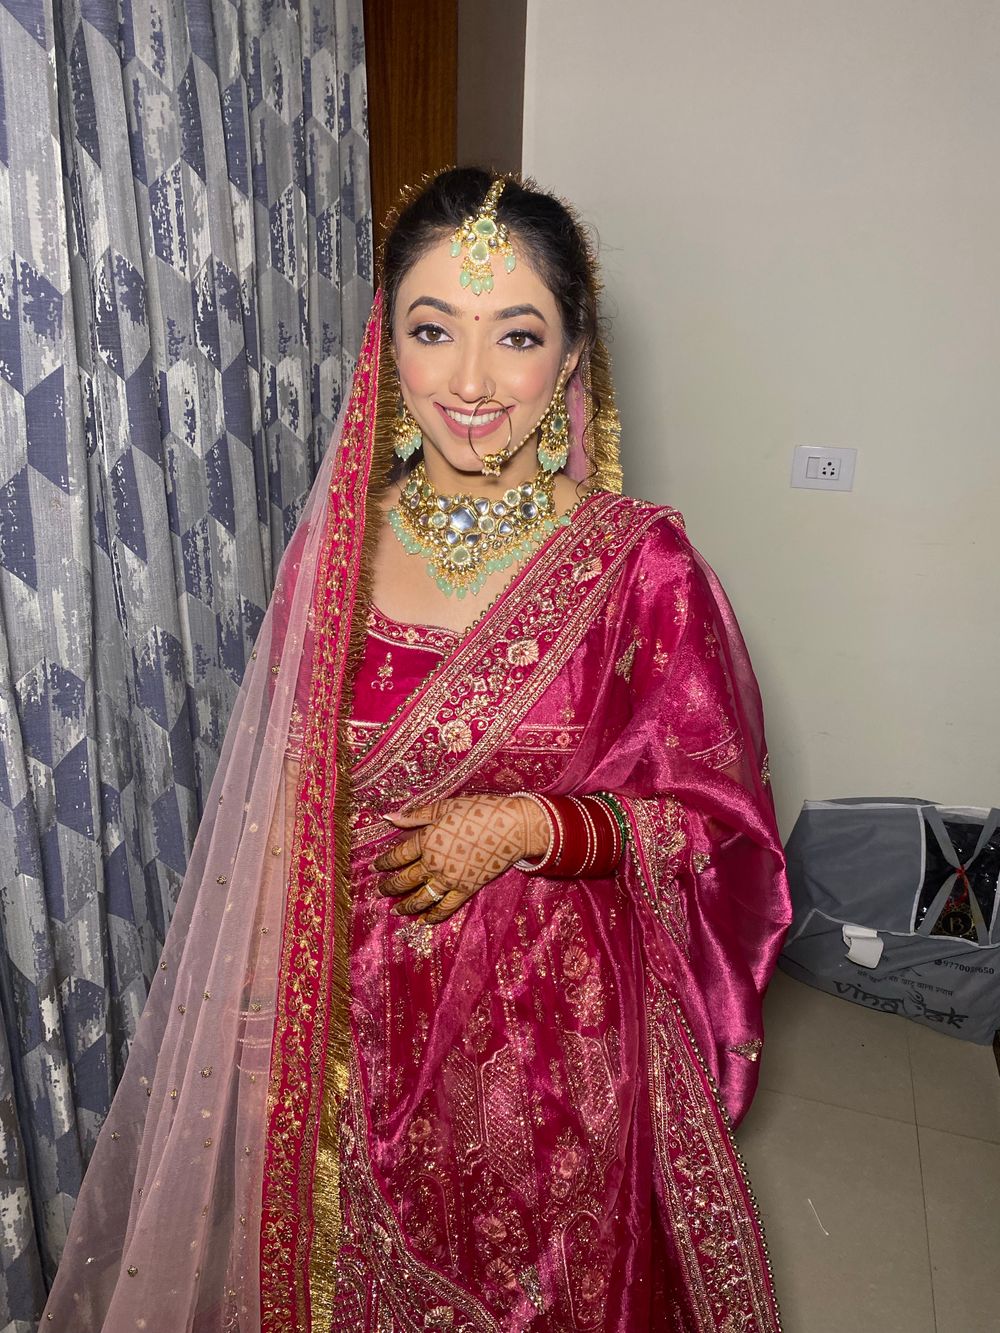 Photo From Anursha’s Wedding Look - By Surbhi Malhotra Makeovers